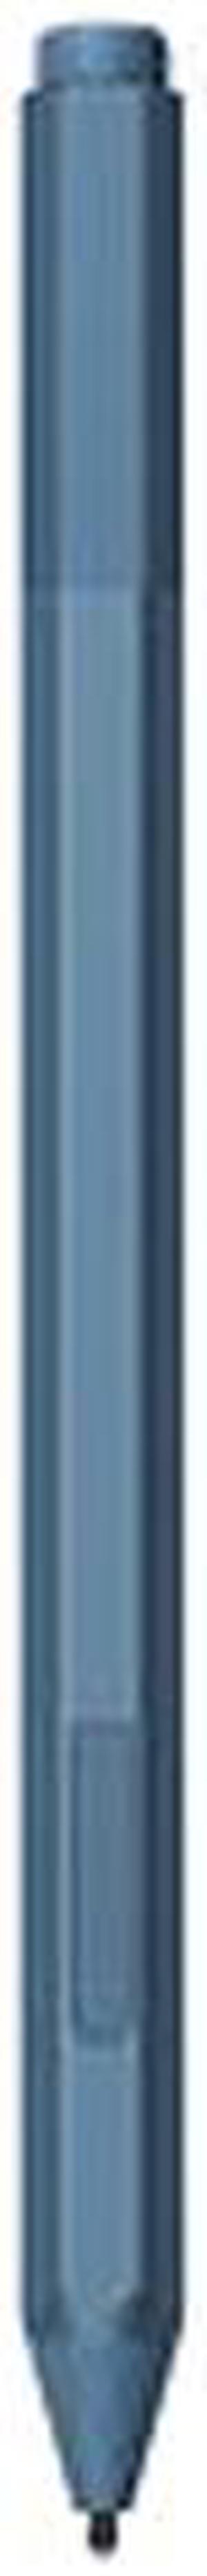 Microsoft Surface Pen EYV-00049 - Ice Blue